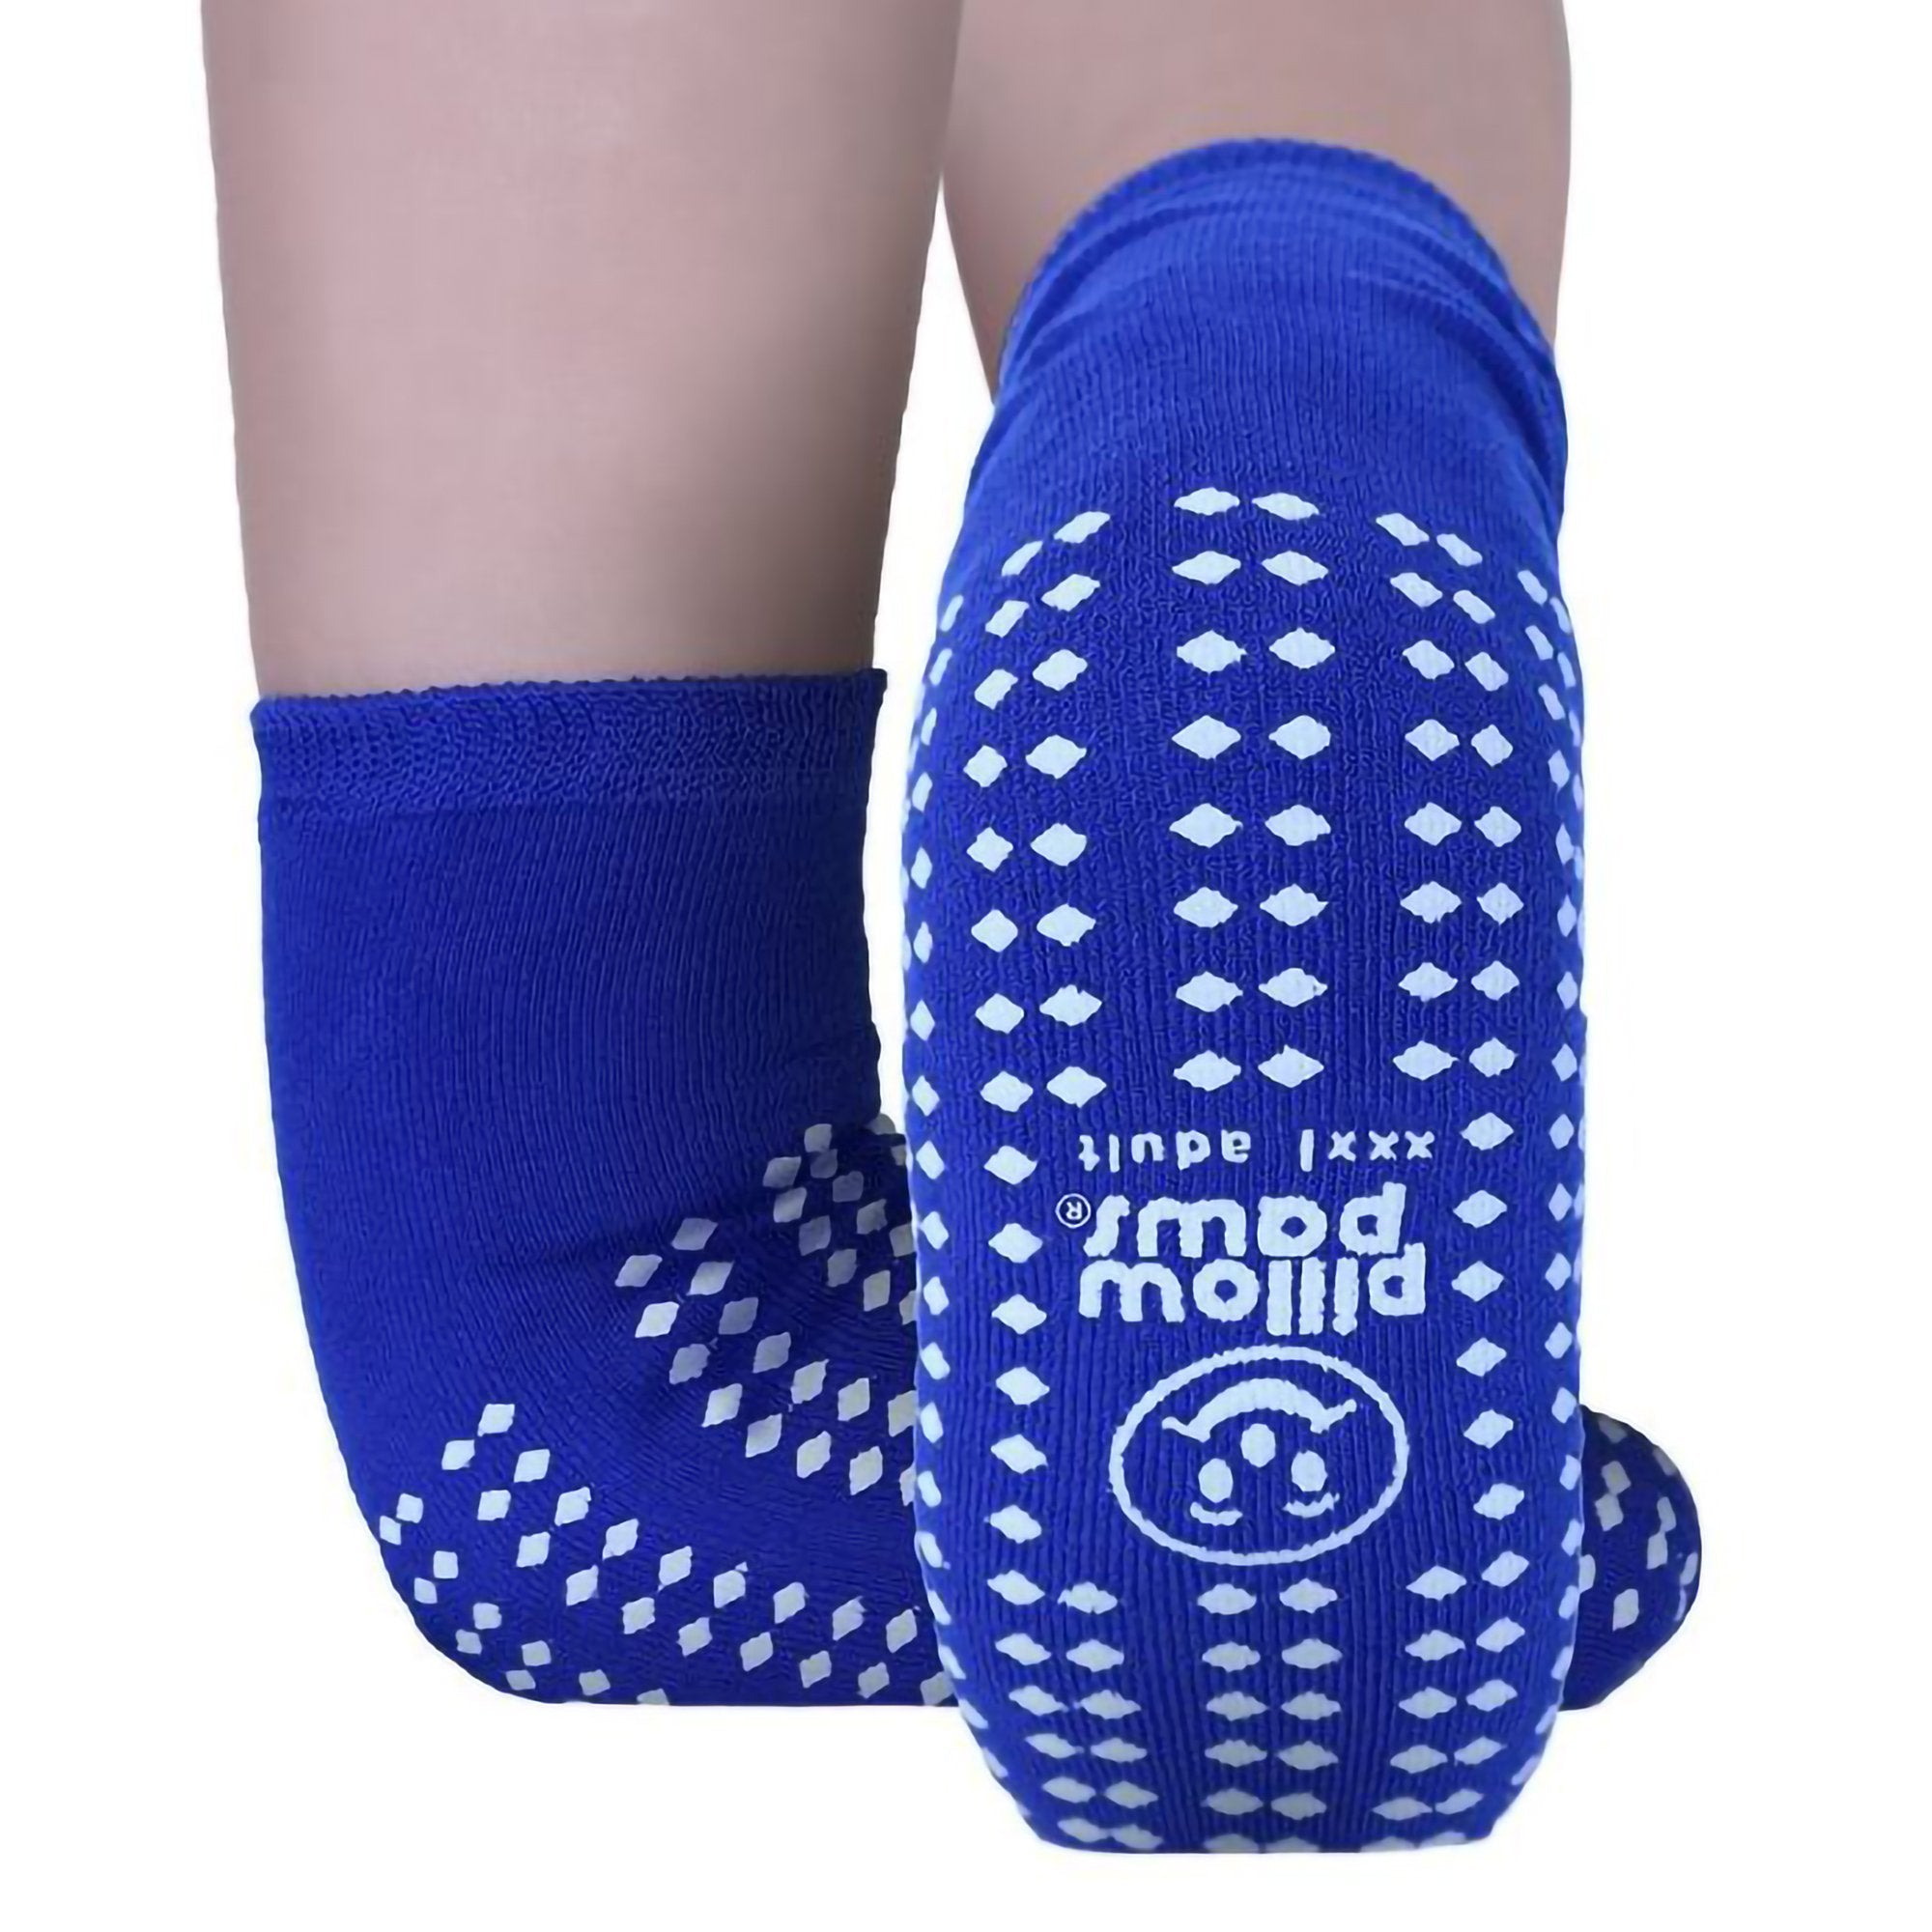 Slipper Socks Pillow Paws Bariatric 3X-Large Royal Blue Ankle High